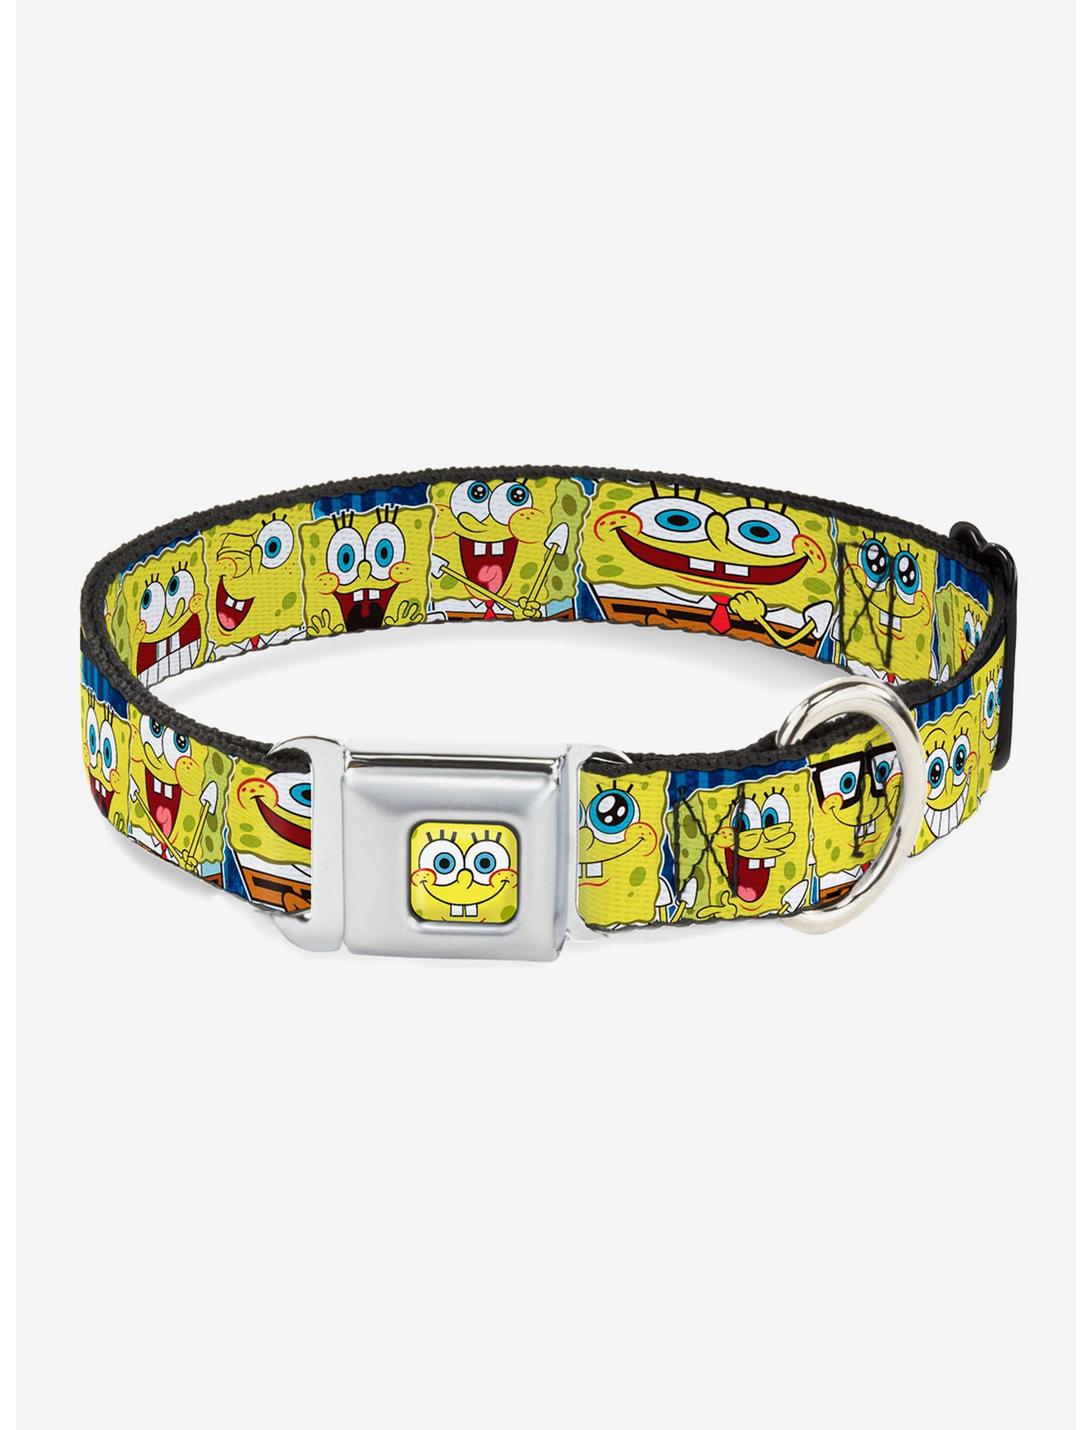 Spongebob Squarepants Expressions Dog Collar Seatbelt Buckle, MULTI COLOR, hi-res